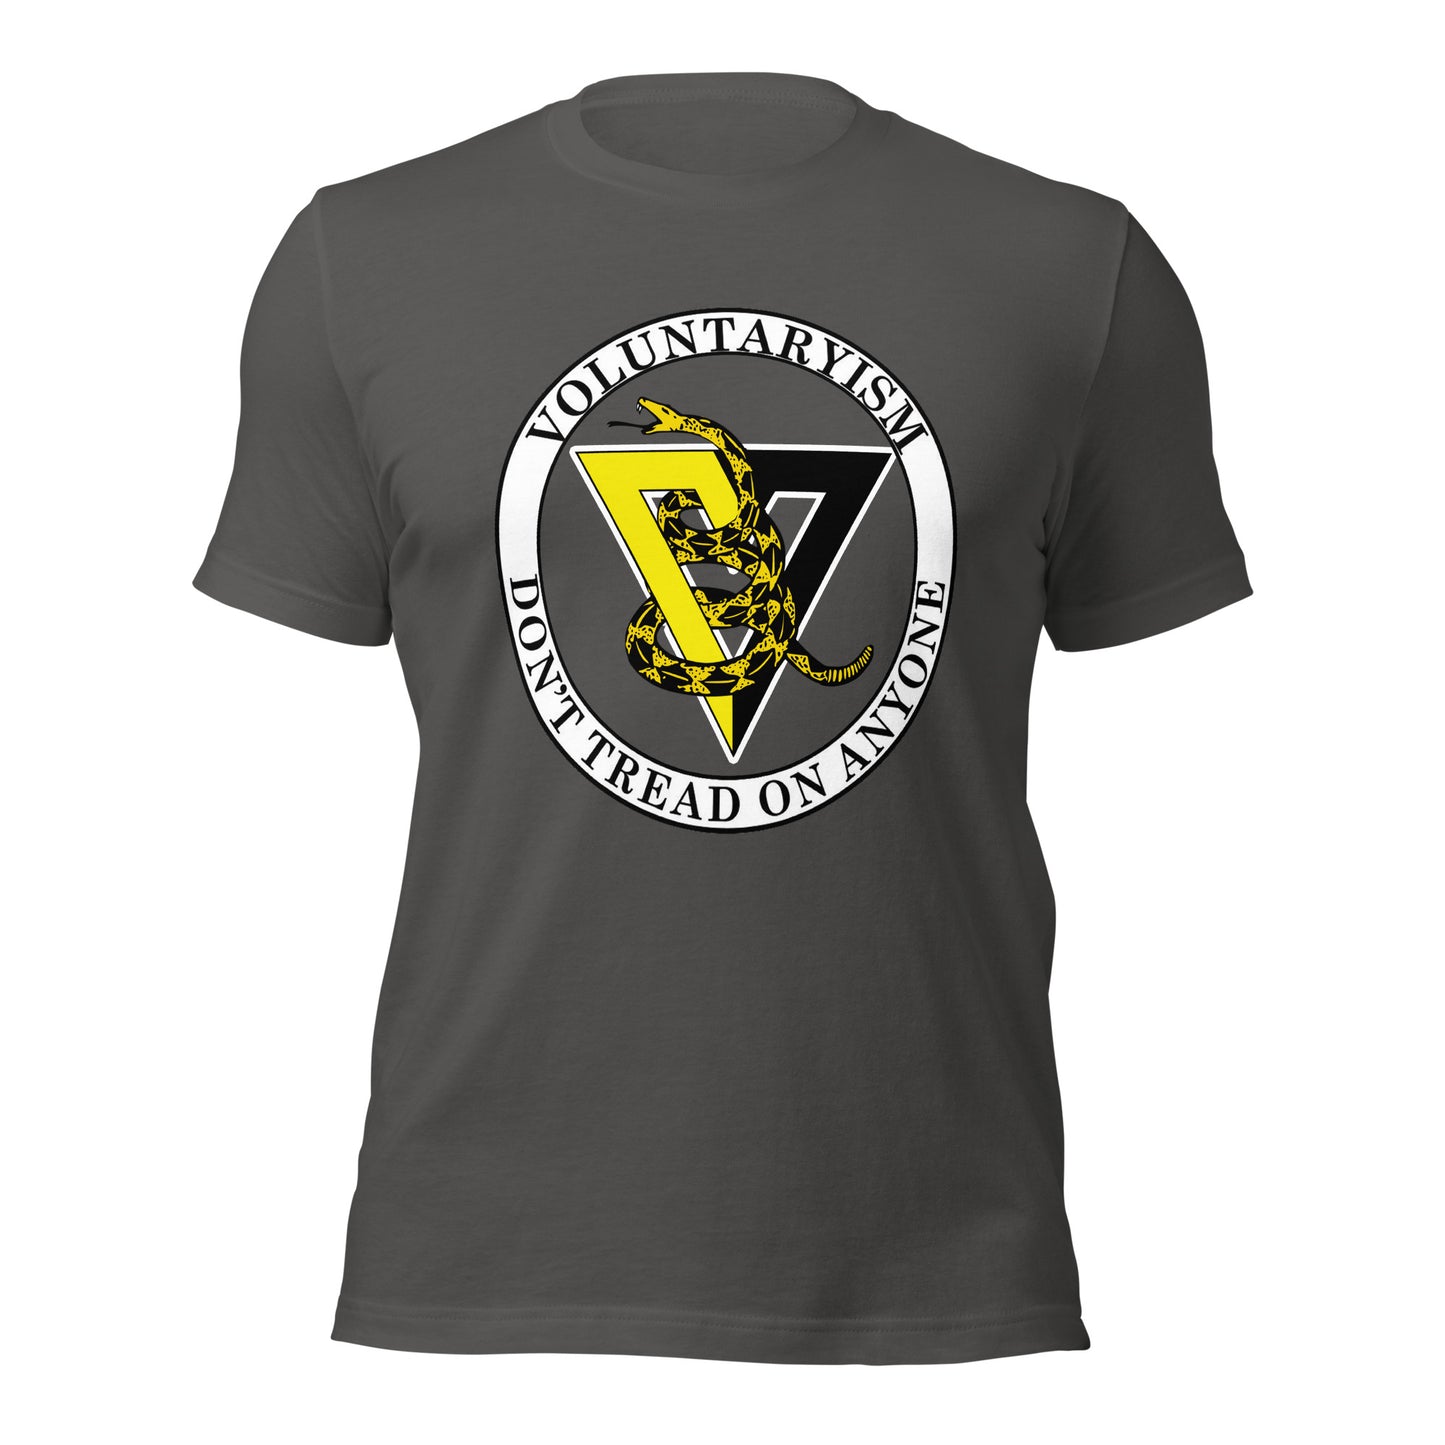 Voluntaryism - Don't tread on anyone - Unisex t-shirt